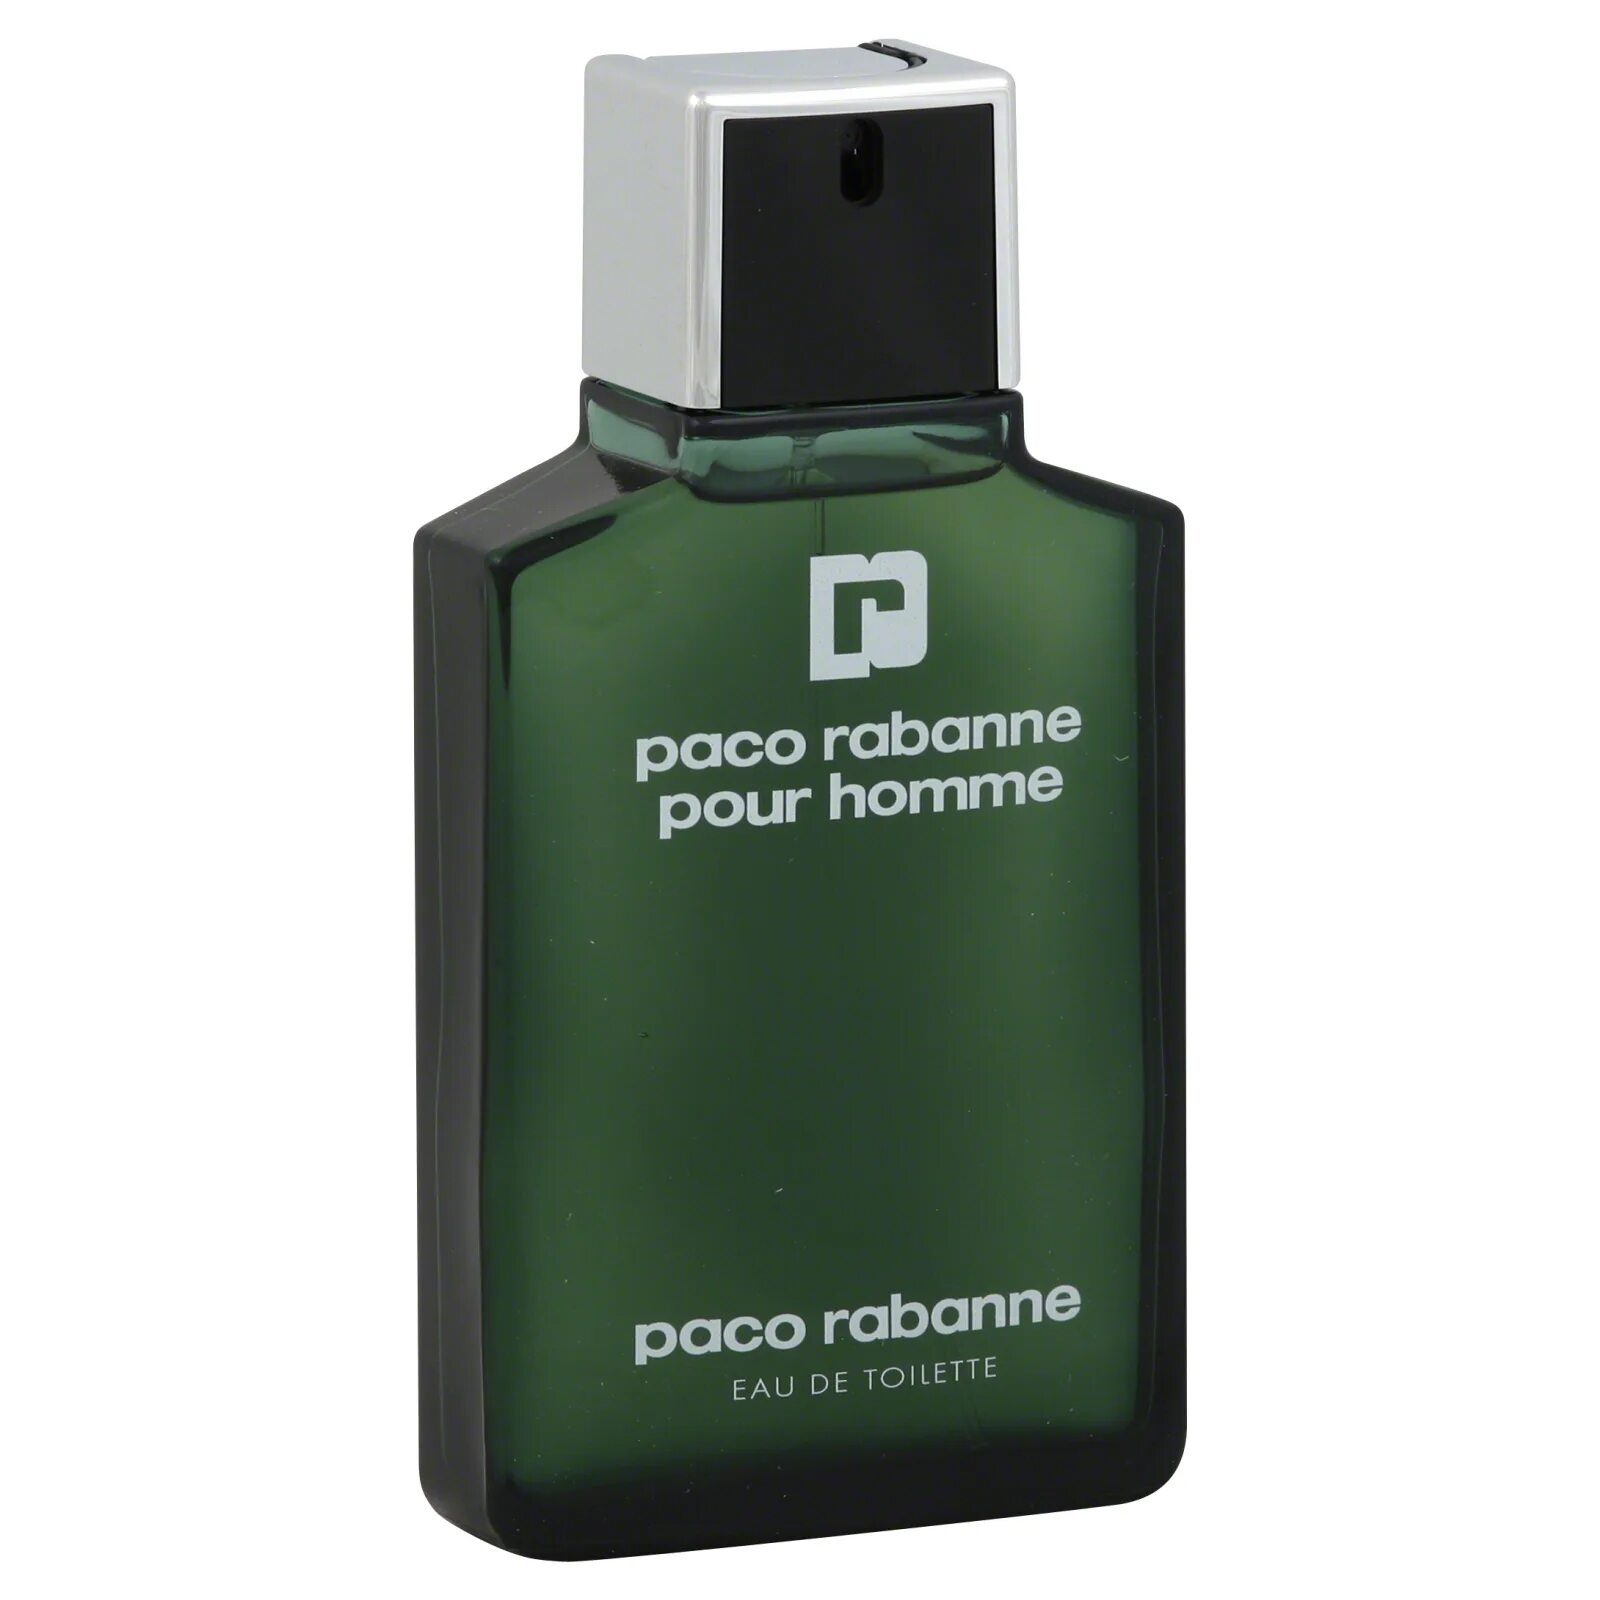 Paco Rabanne pour homme Eau копия. Paco Rabanne мужские pour Home. Paco Rabanne pour homme EDT 100ml. Original Vetiver Paco Rabanne. Rabanne pour homme